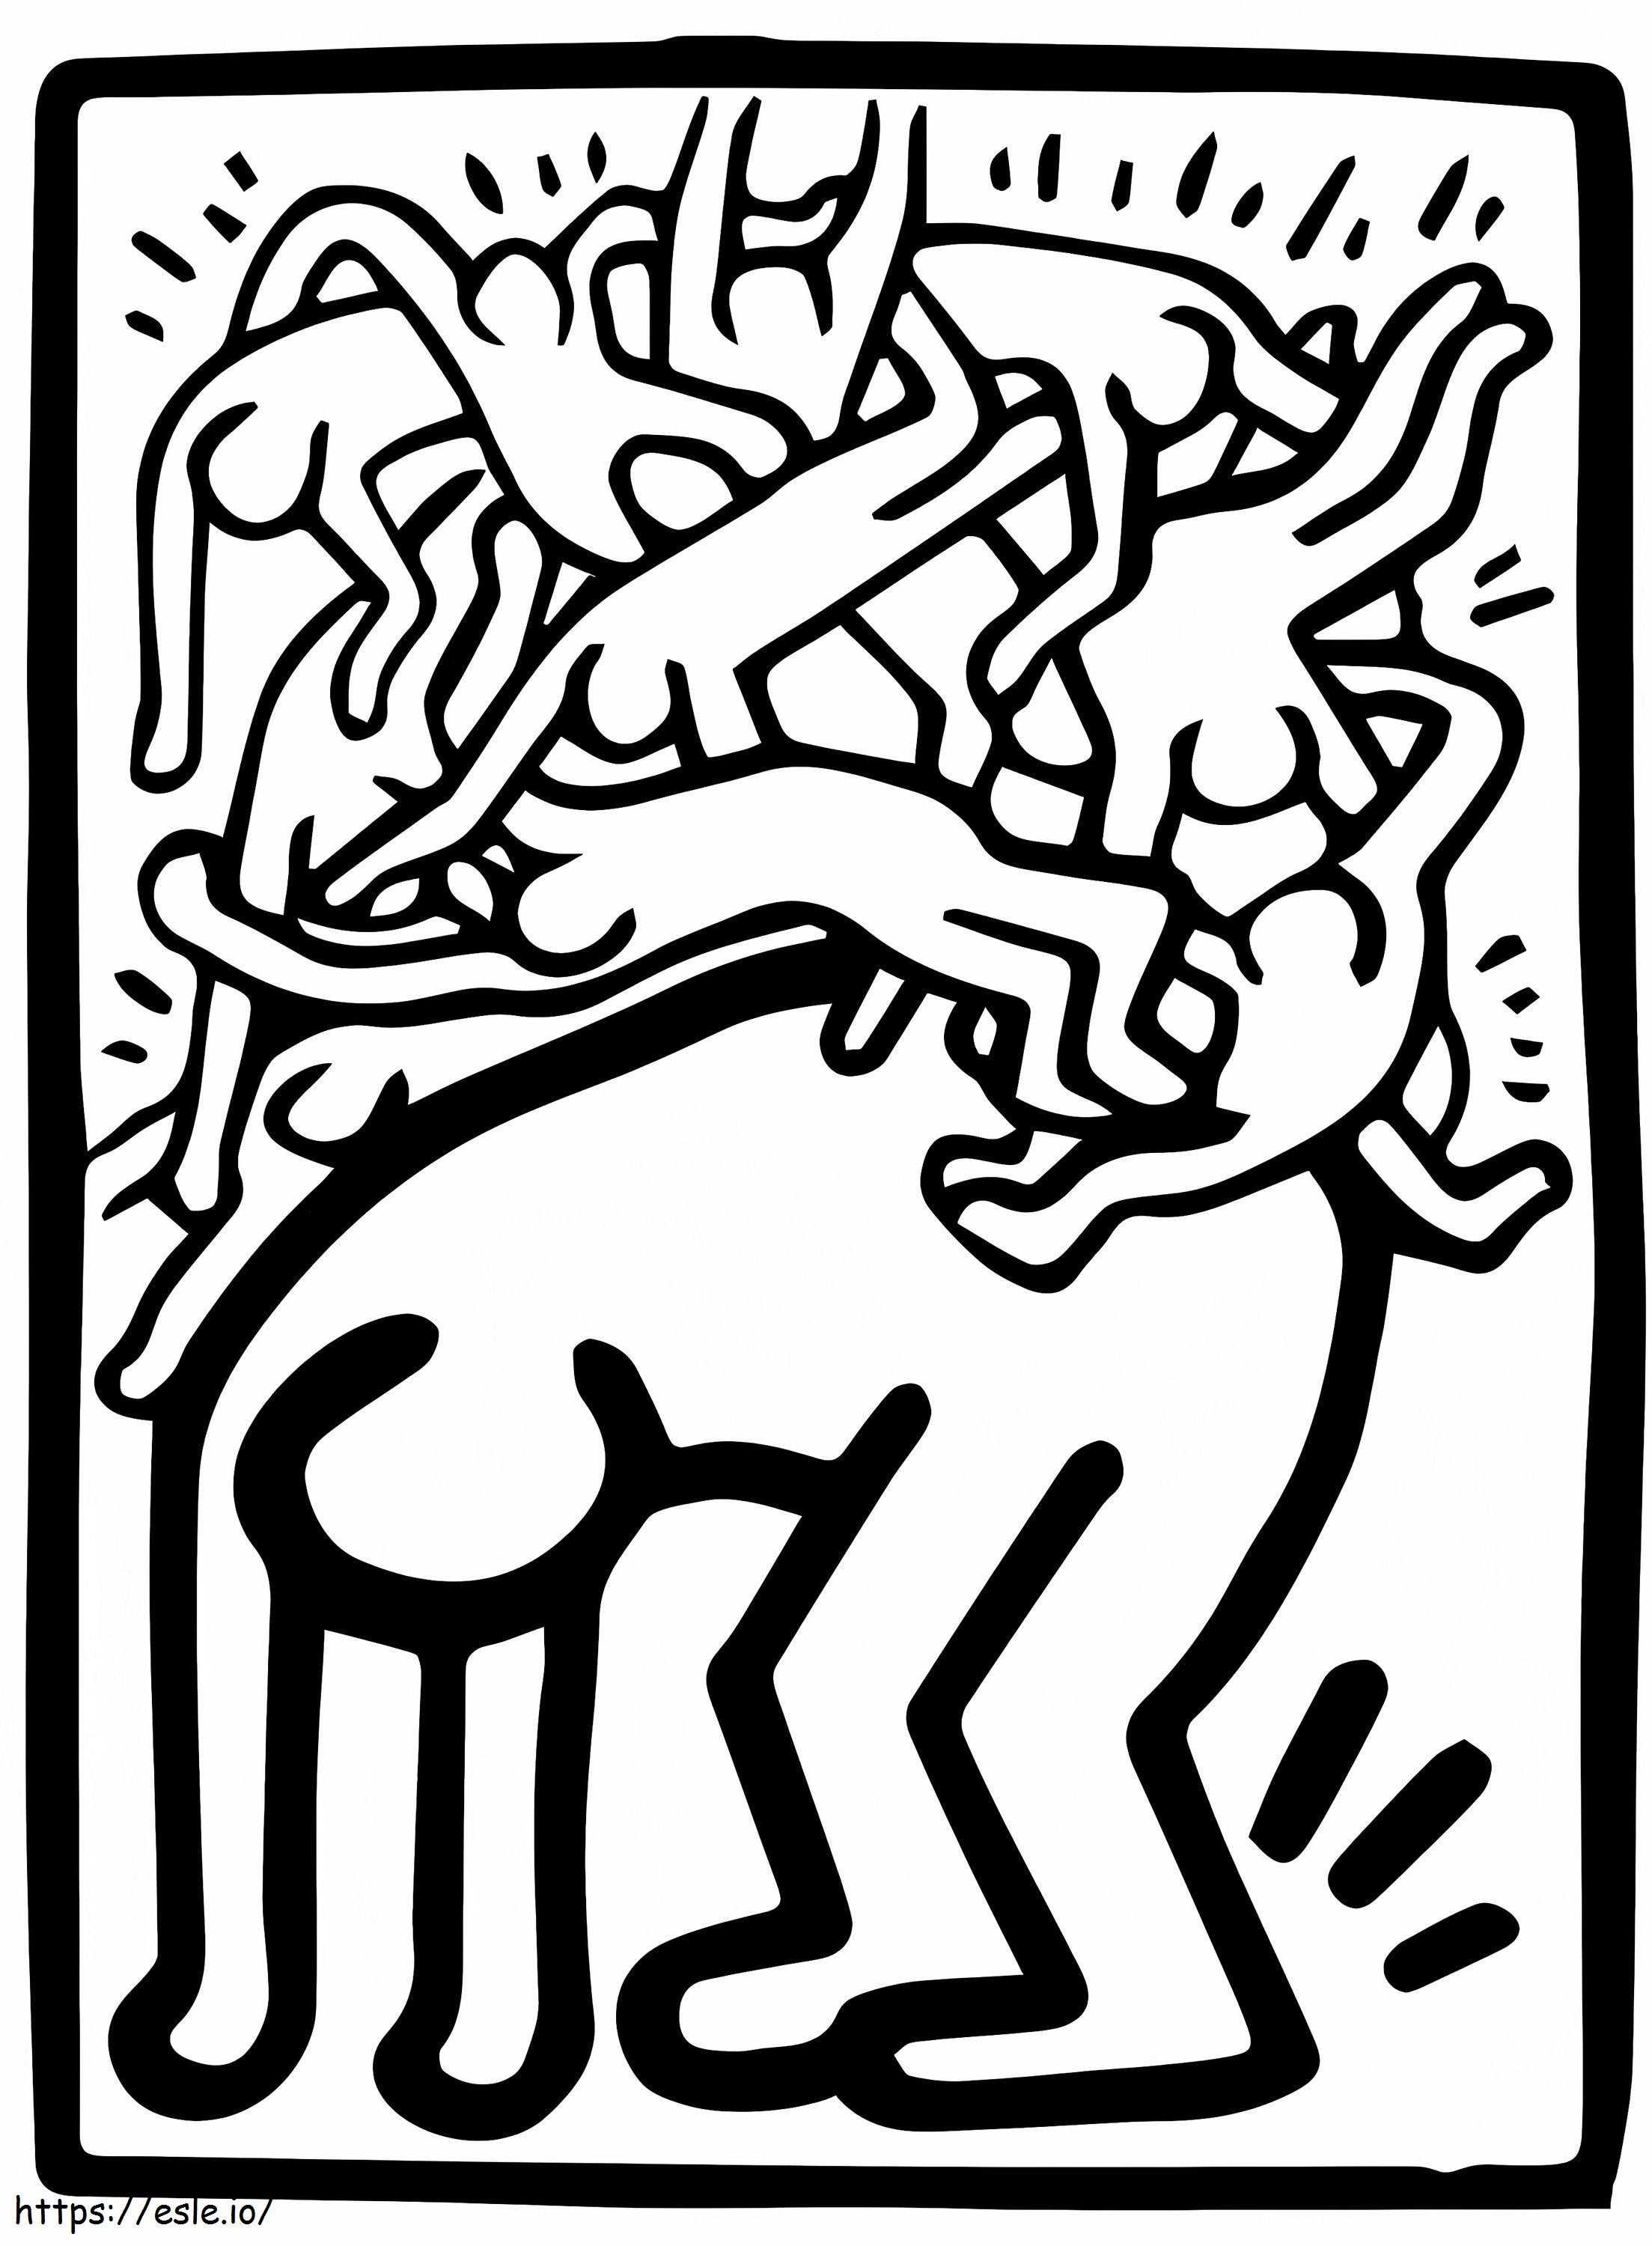  Fight Aids Worldwide Oleh Keith Haring Gambar Mewarnai